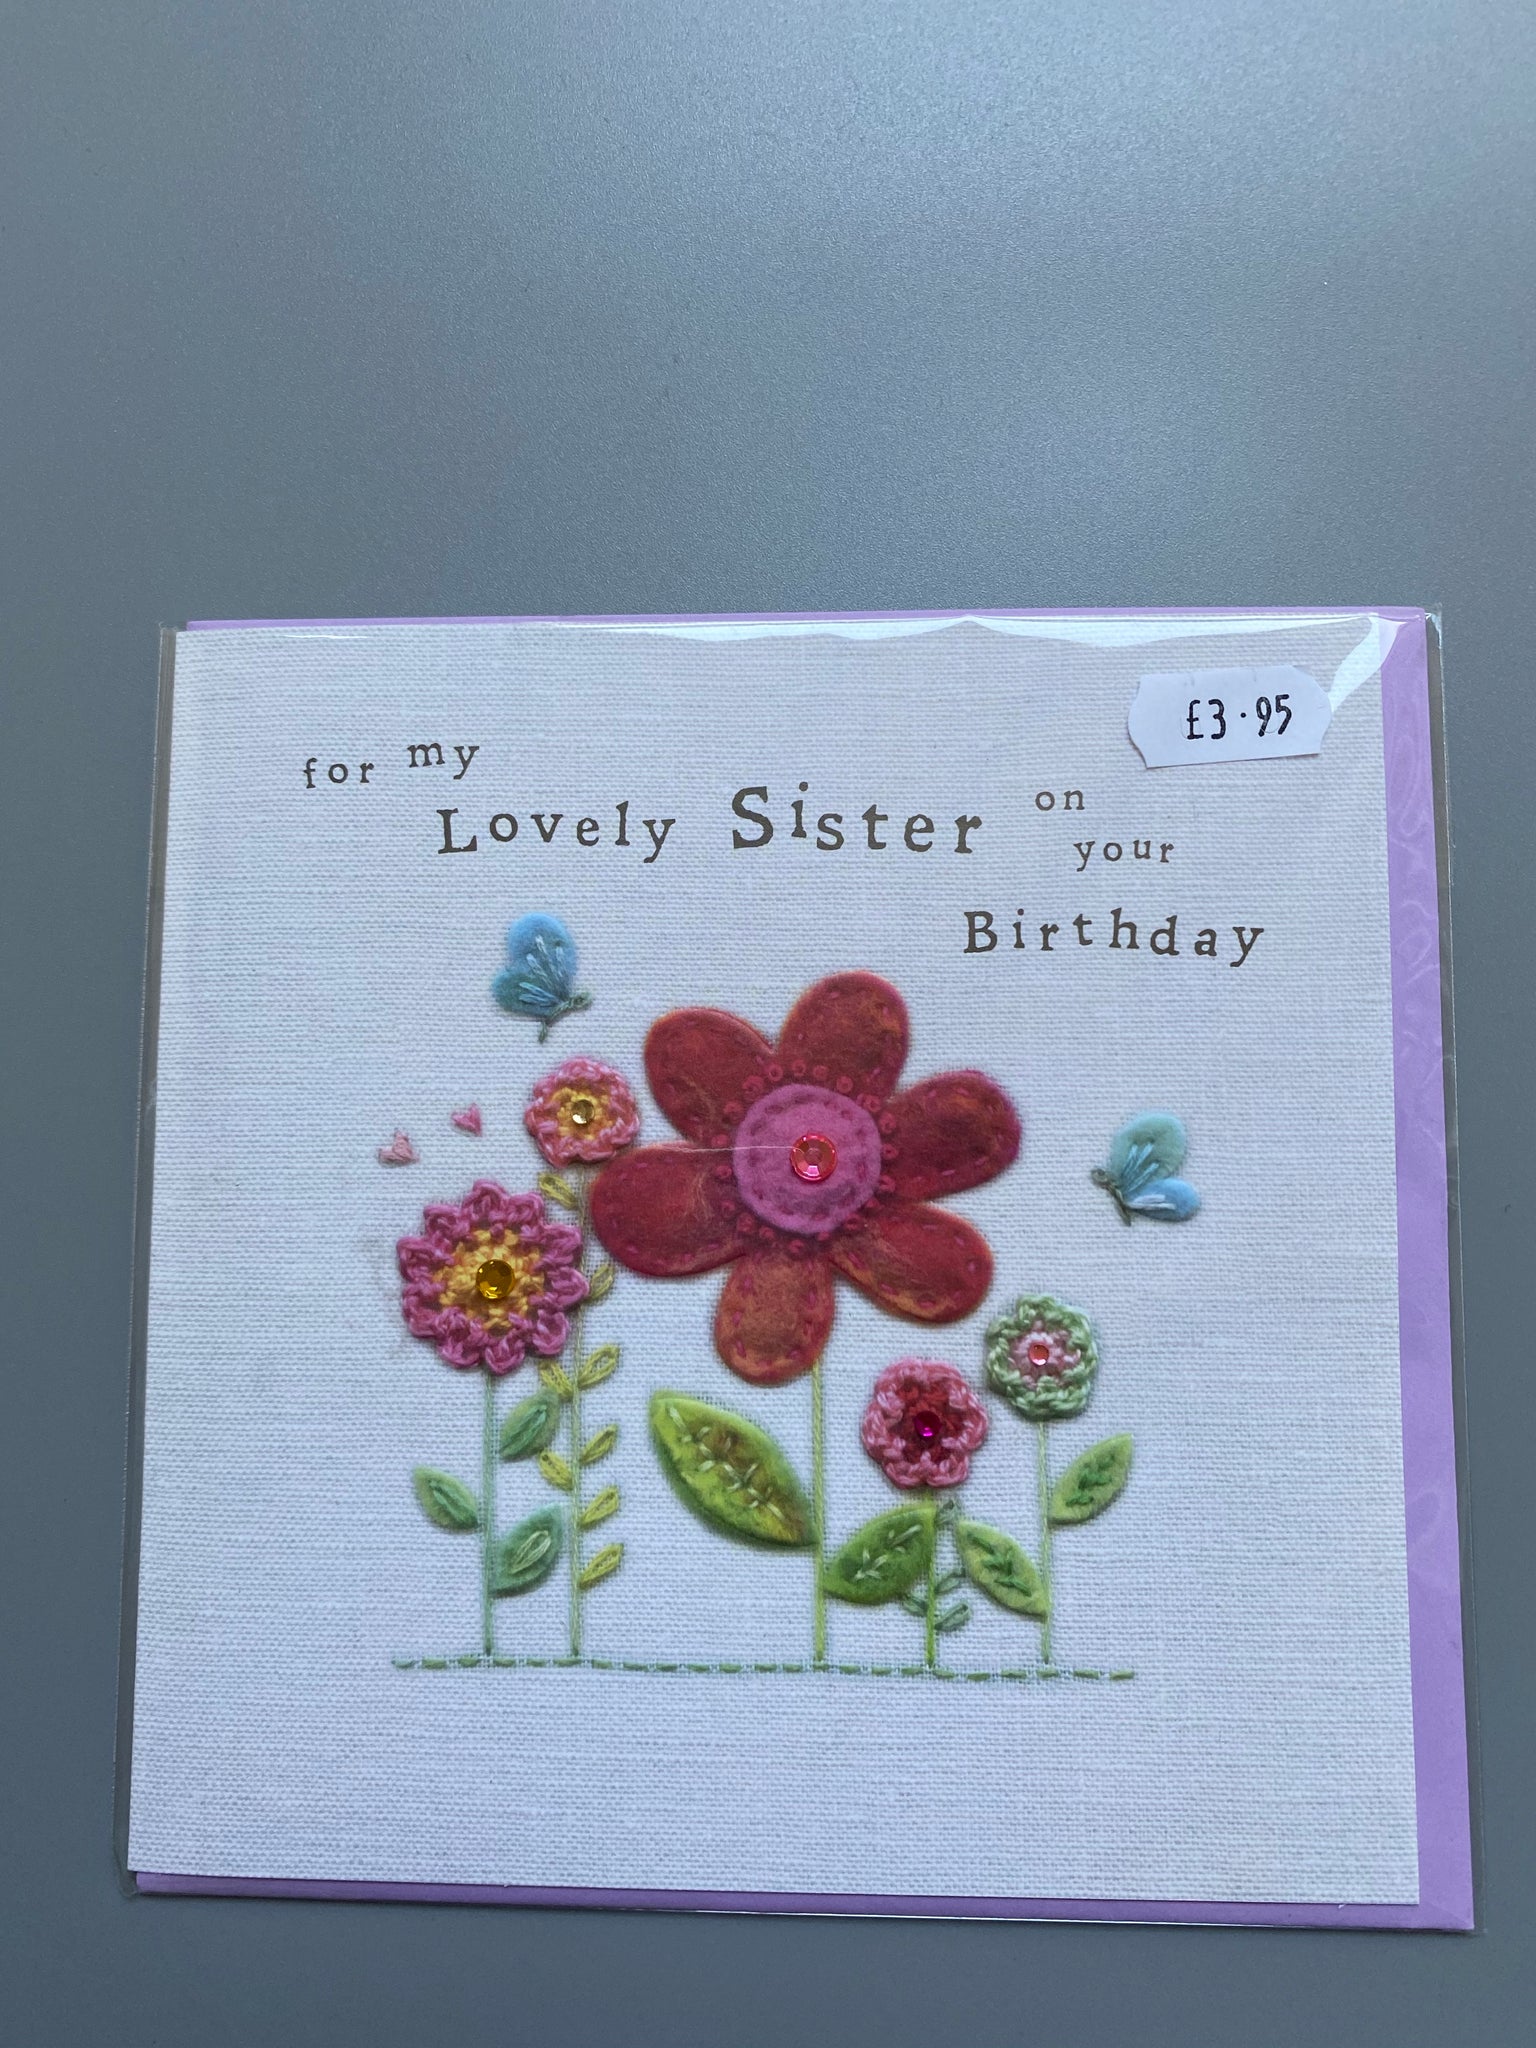 For my lovely sister card